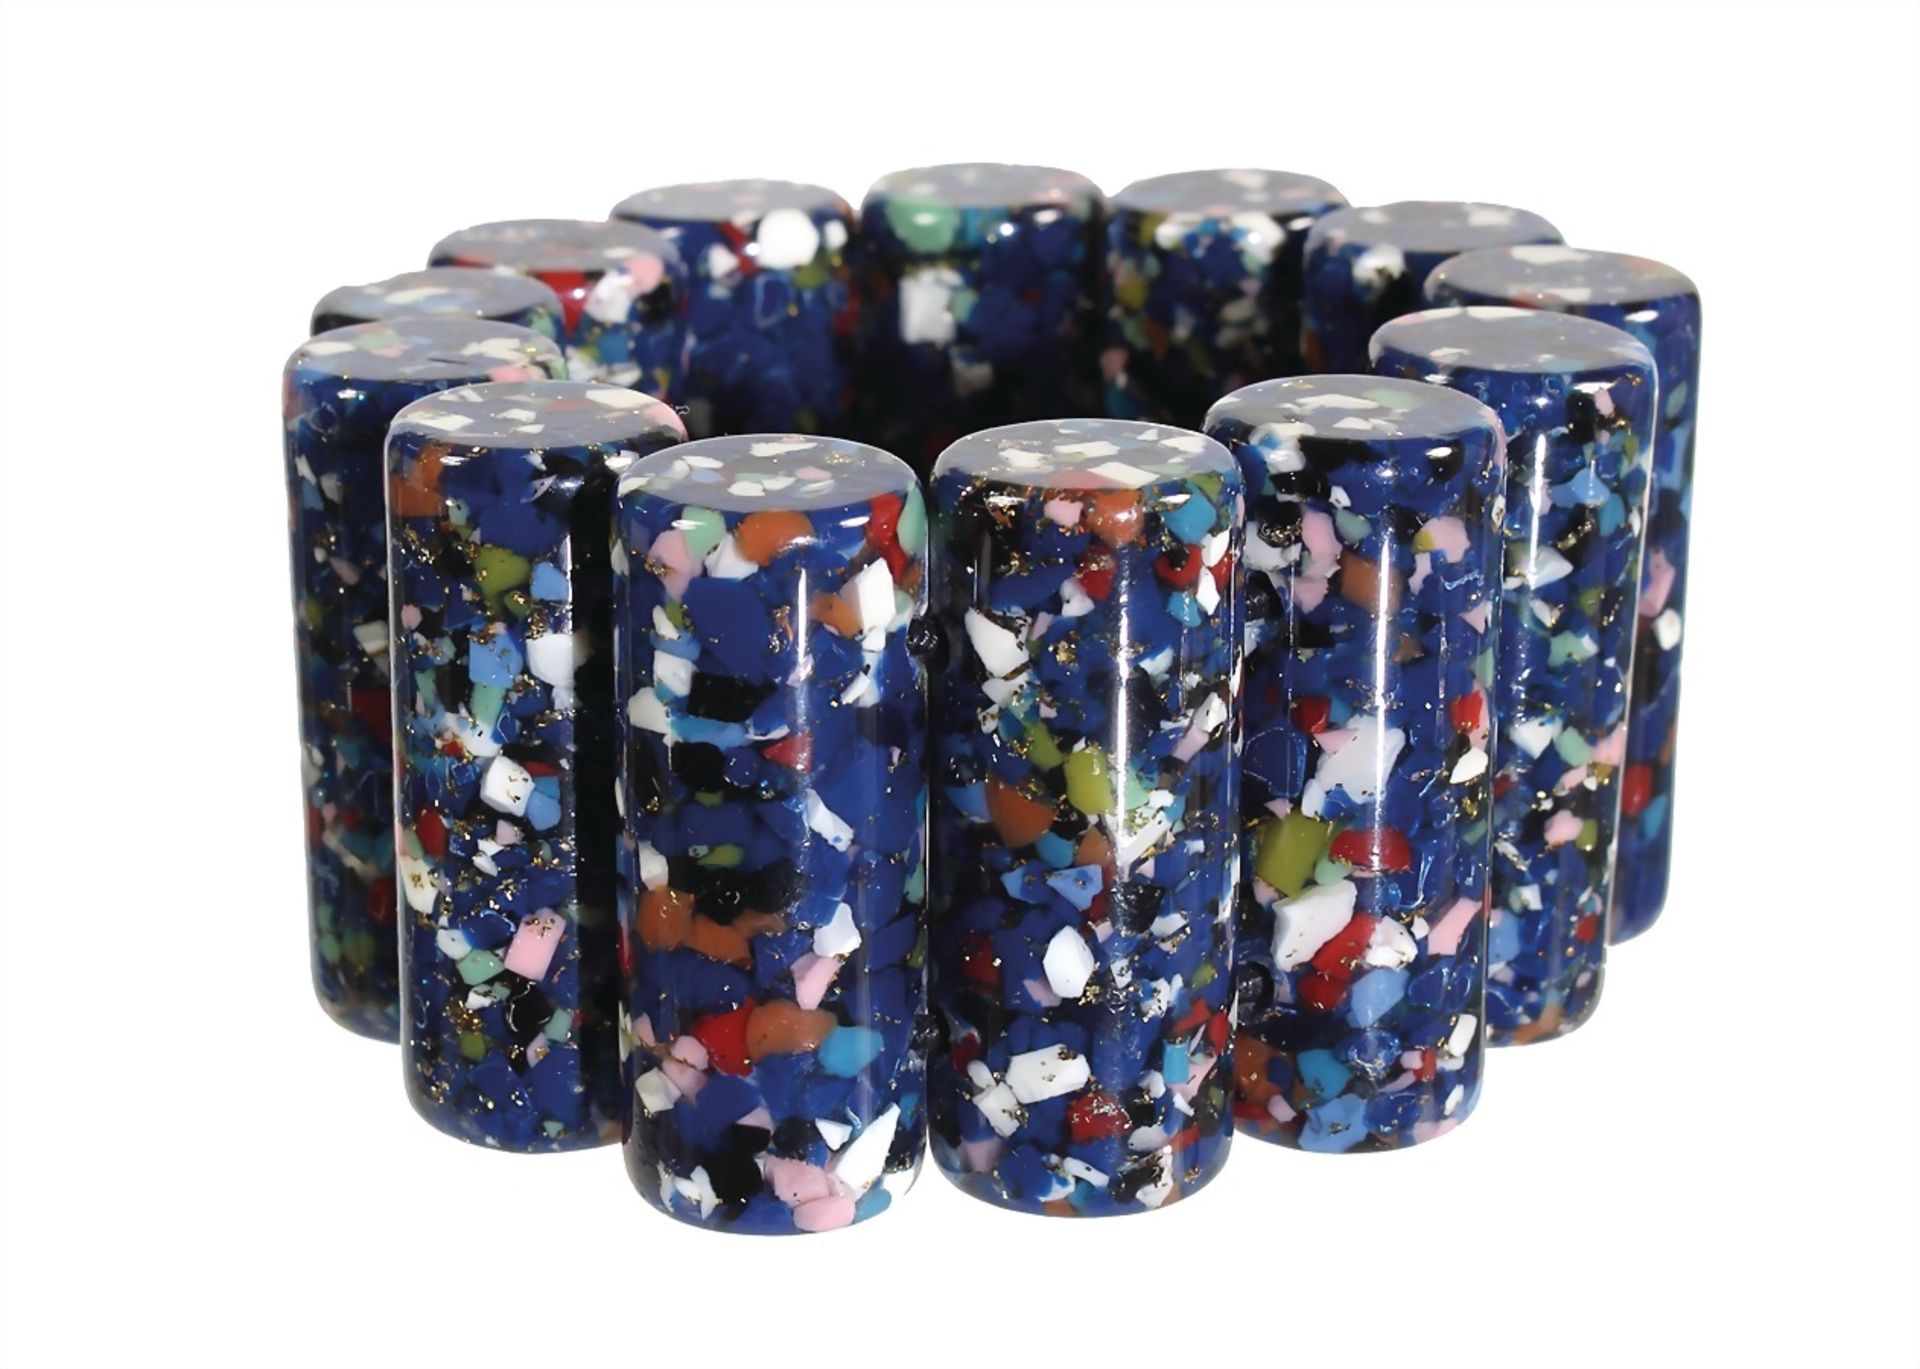 bracelet, "VINTAGE" (Italy ?), speckled colored plastic cylinders, diameter = 16.5 mm, width = 40.